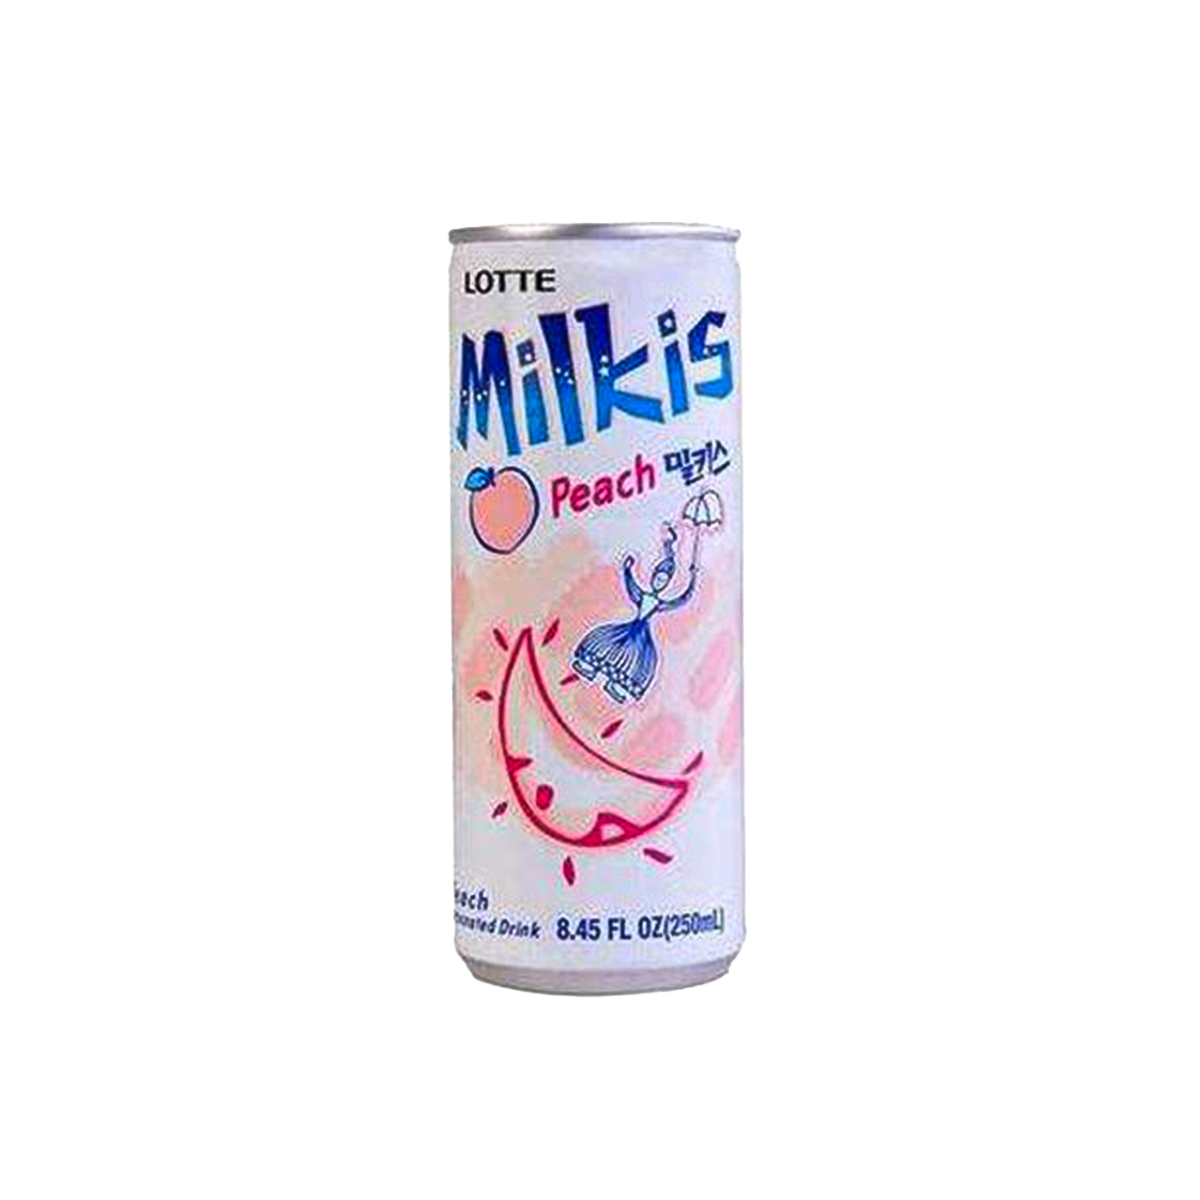 Bebida Gaseificada MILKIS Sabor Pêssego Lotte - 250 mL